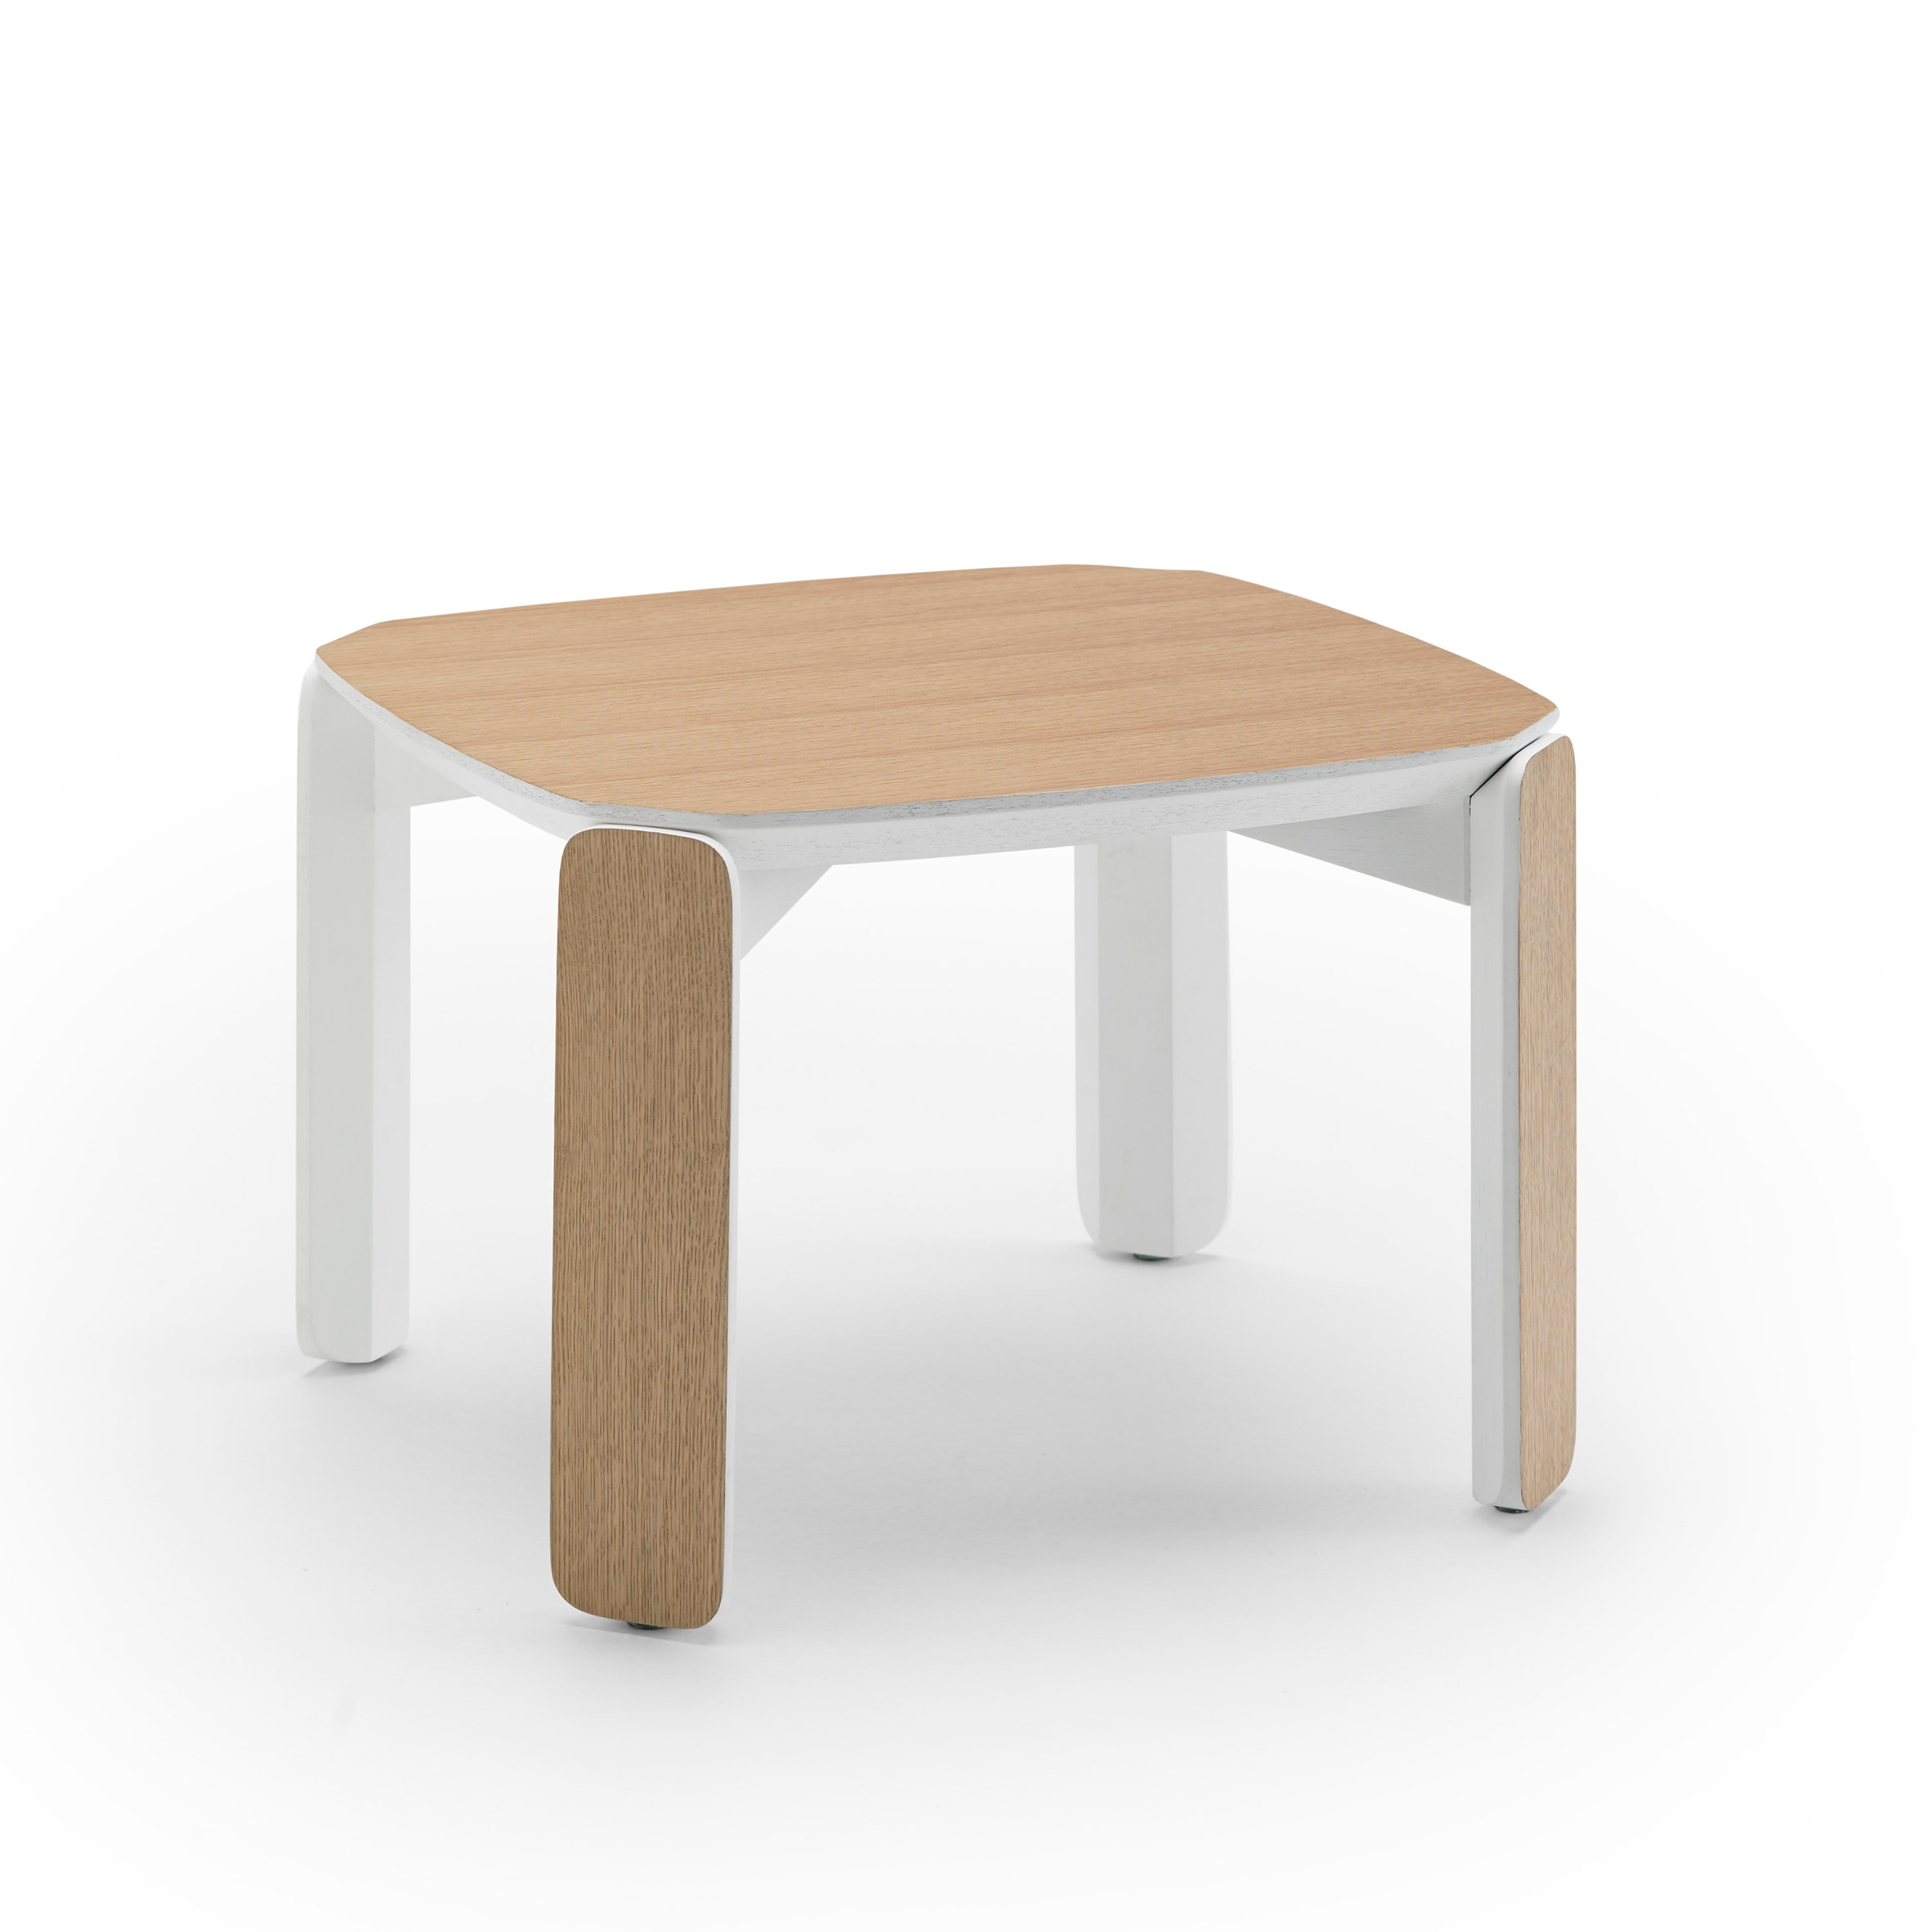 45-table-system-inyard-la-selva-design-furniture_dezeen_2364_col_19